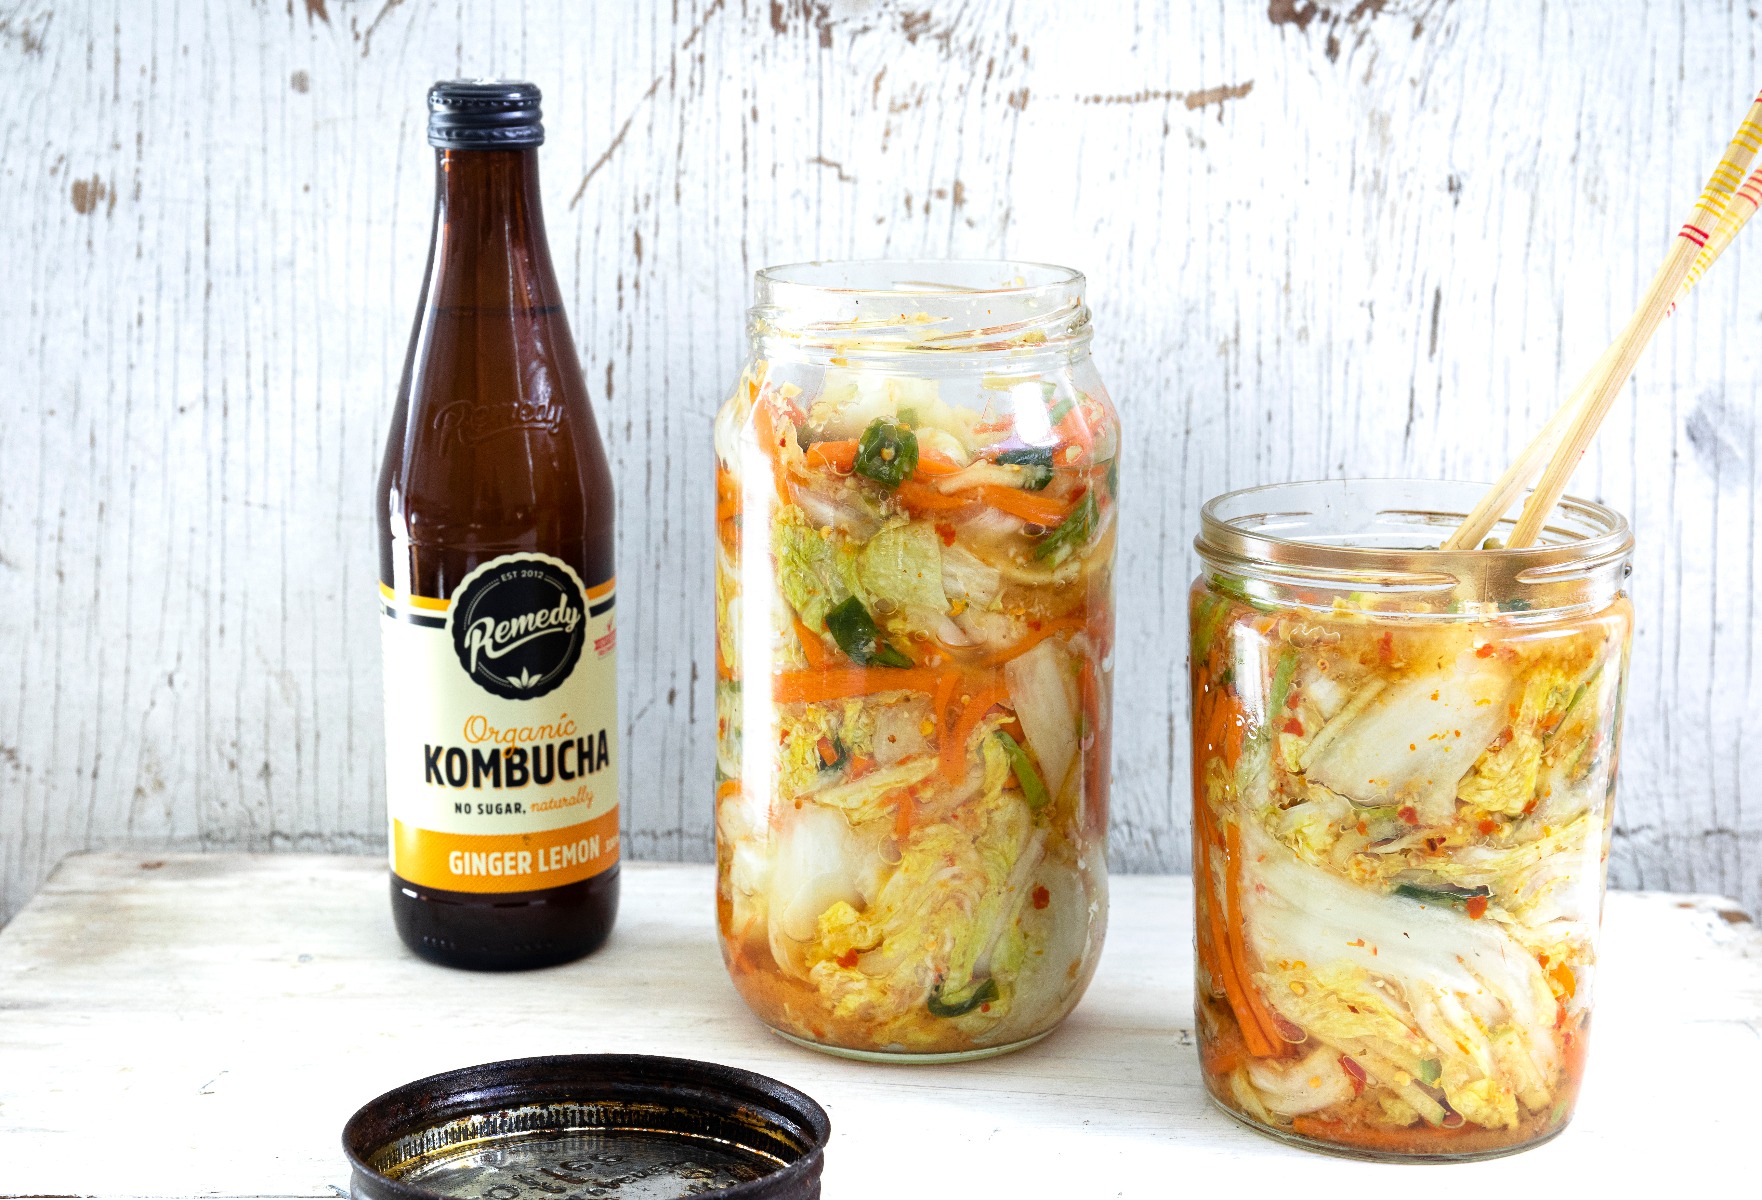 Remedy Kombucha and Kimchi